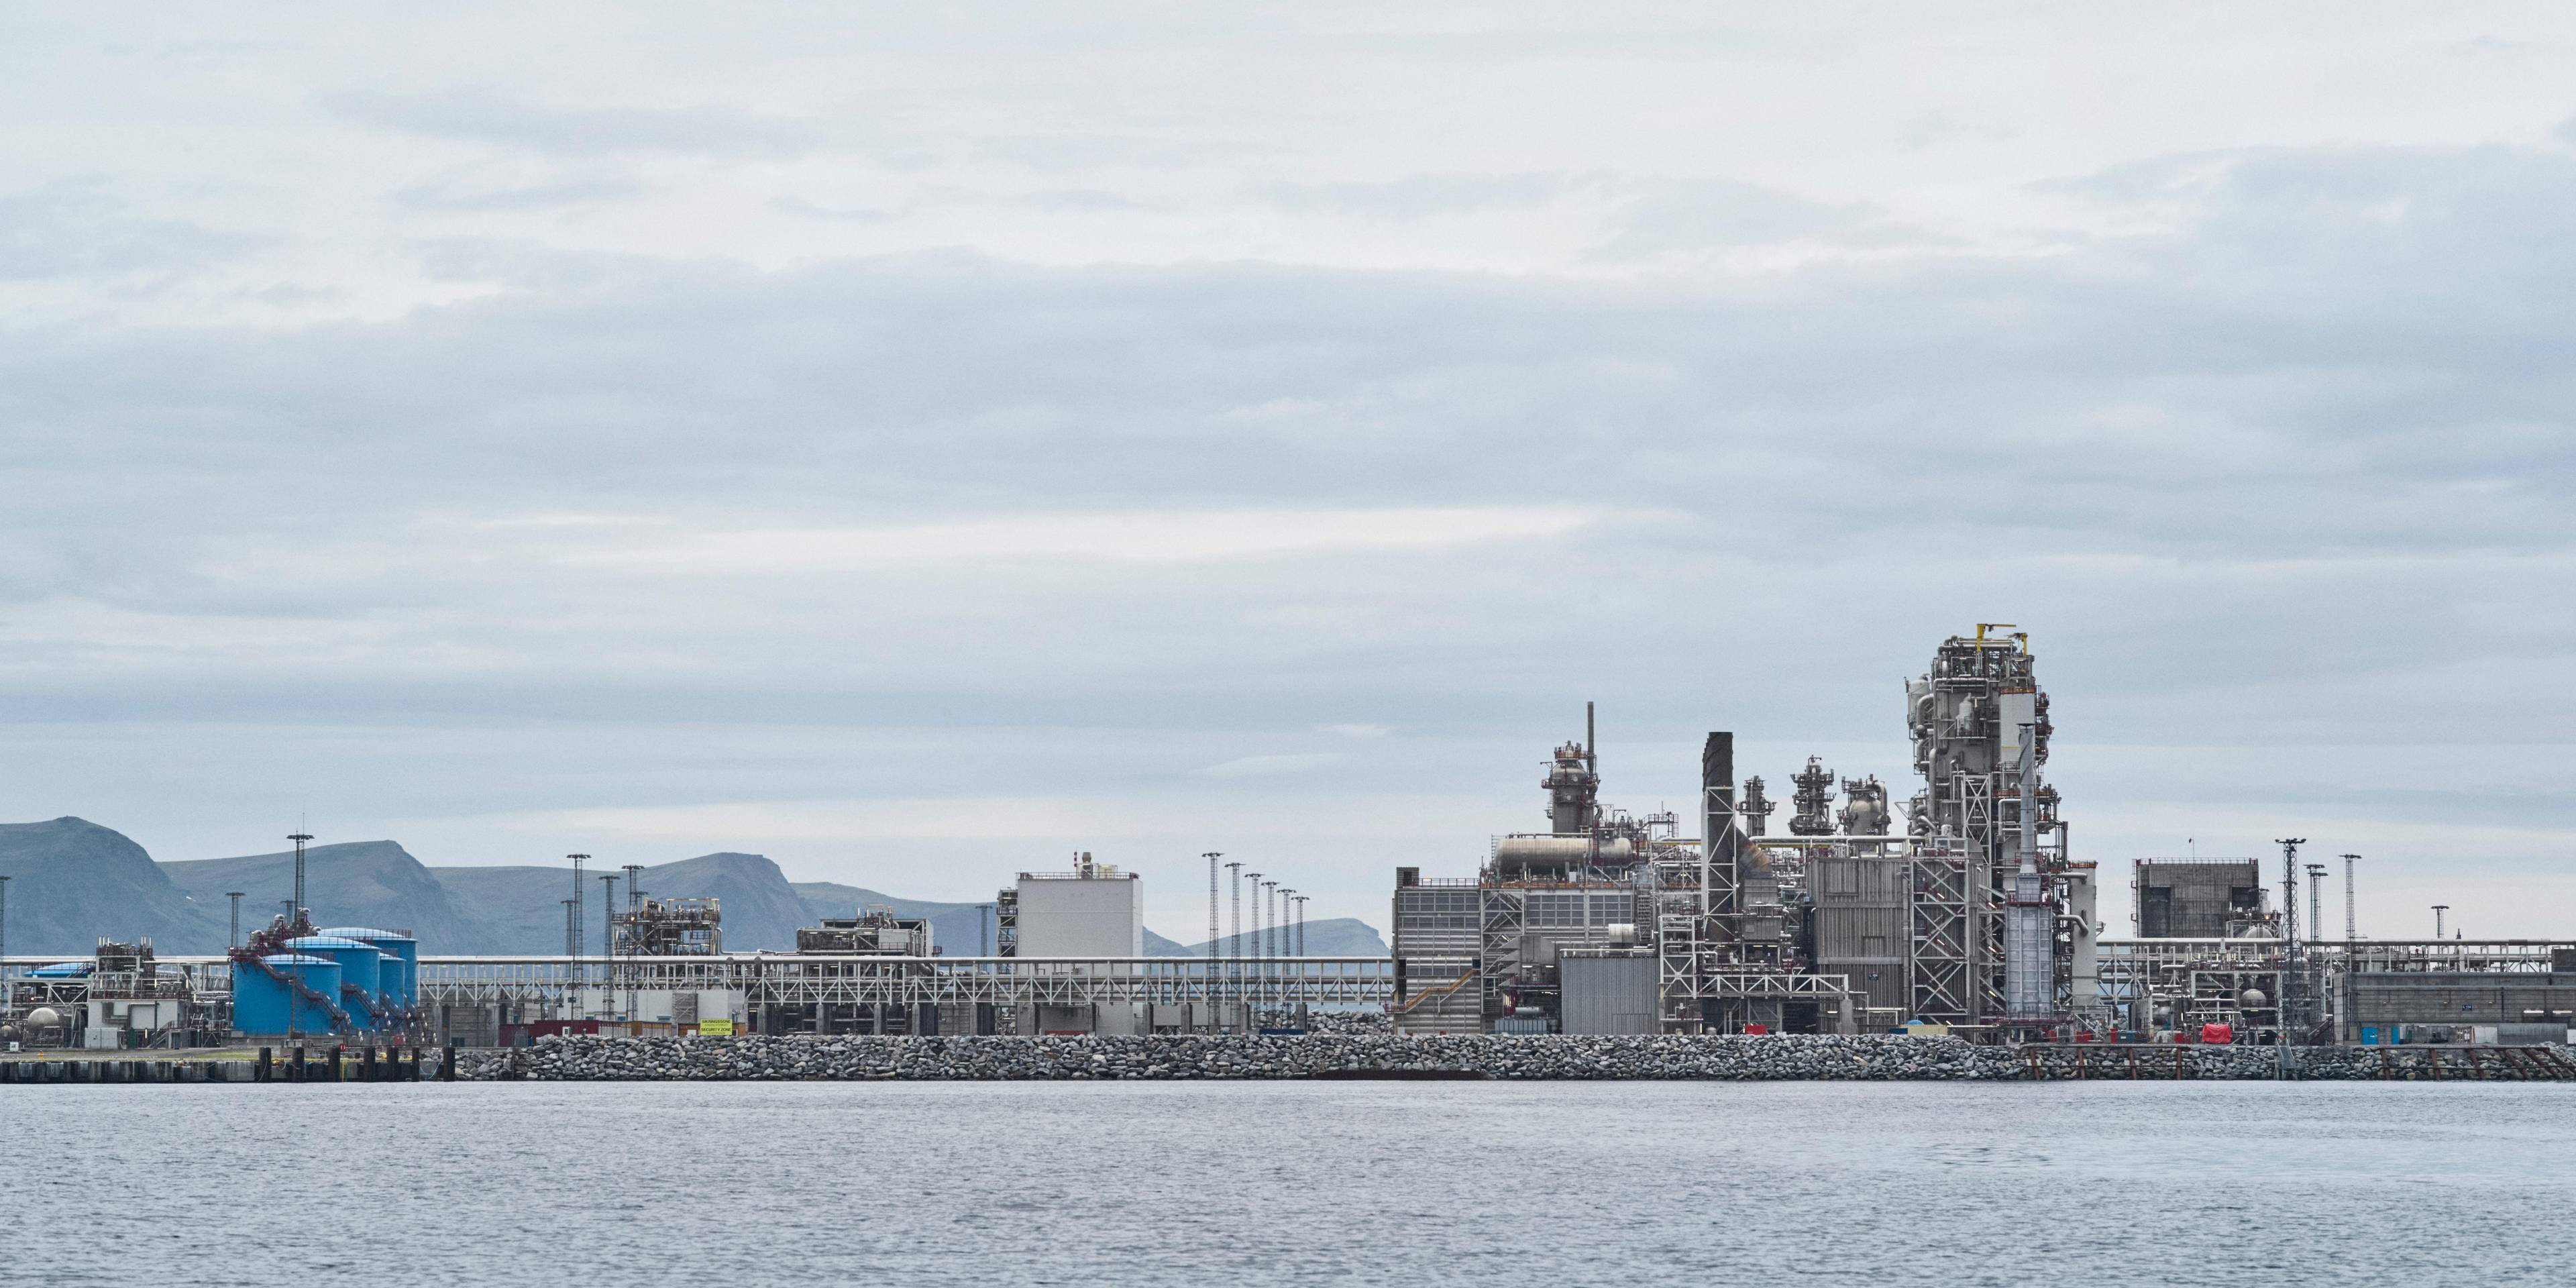 The Hammerfest LNG plant.